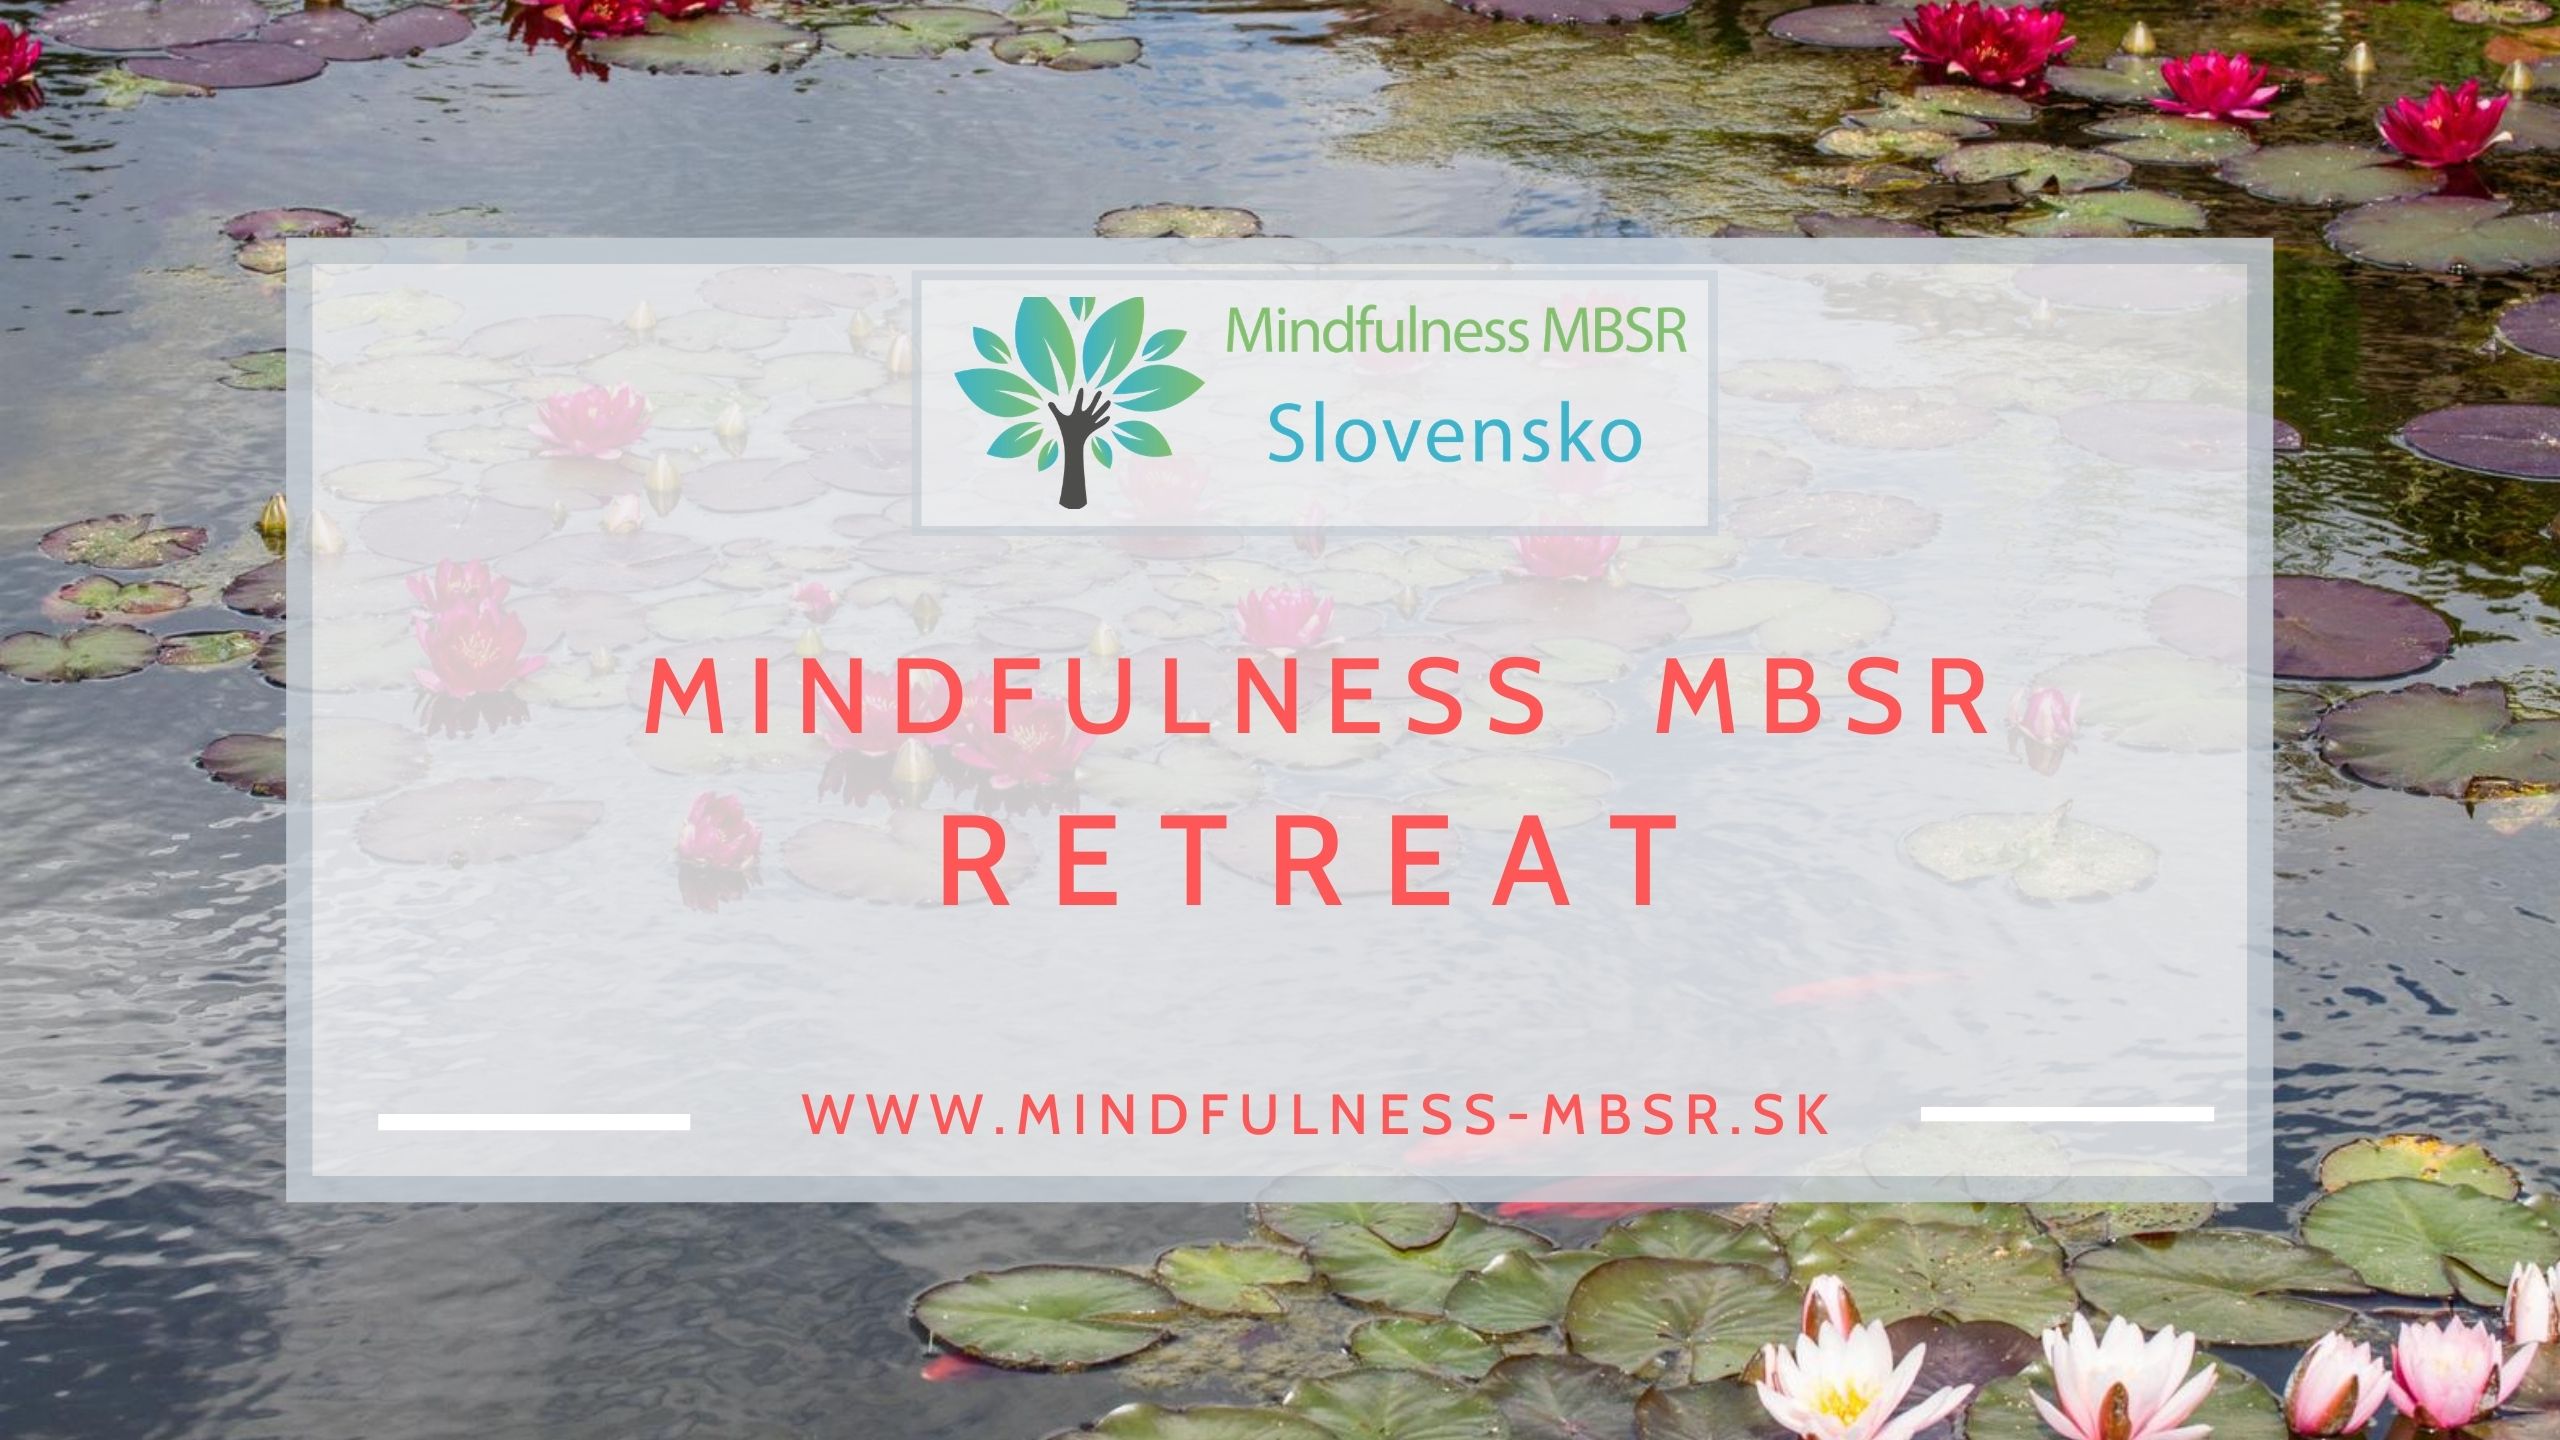 Mindfulness MBSR retreat Mindfulness MBSR Slovensko